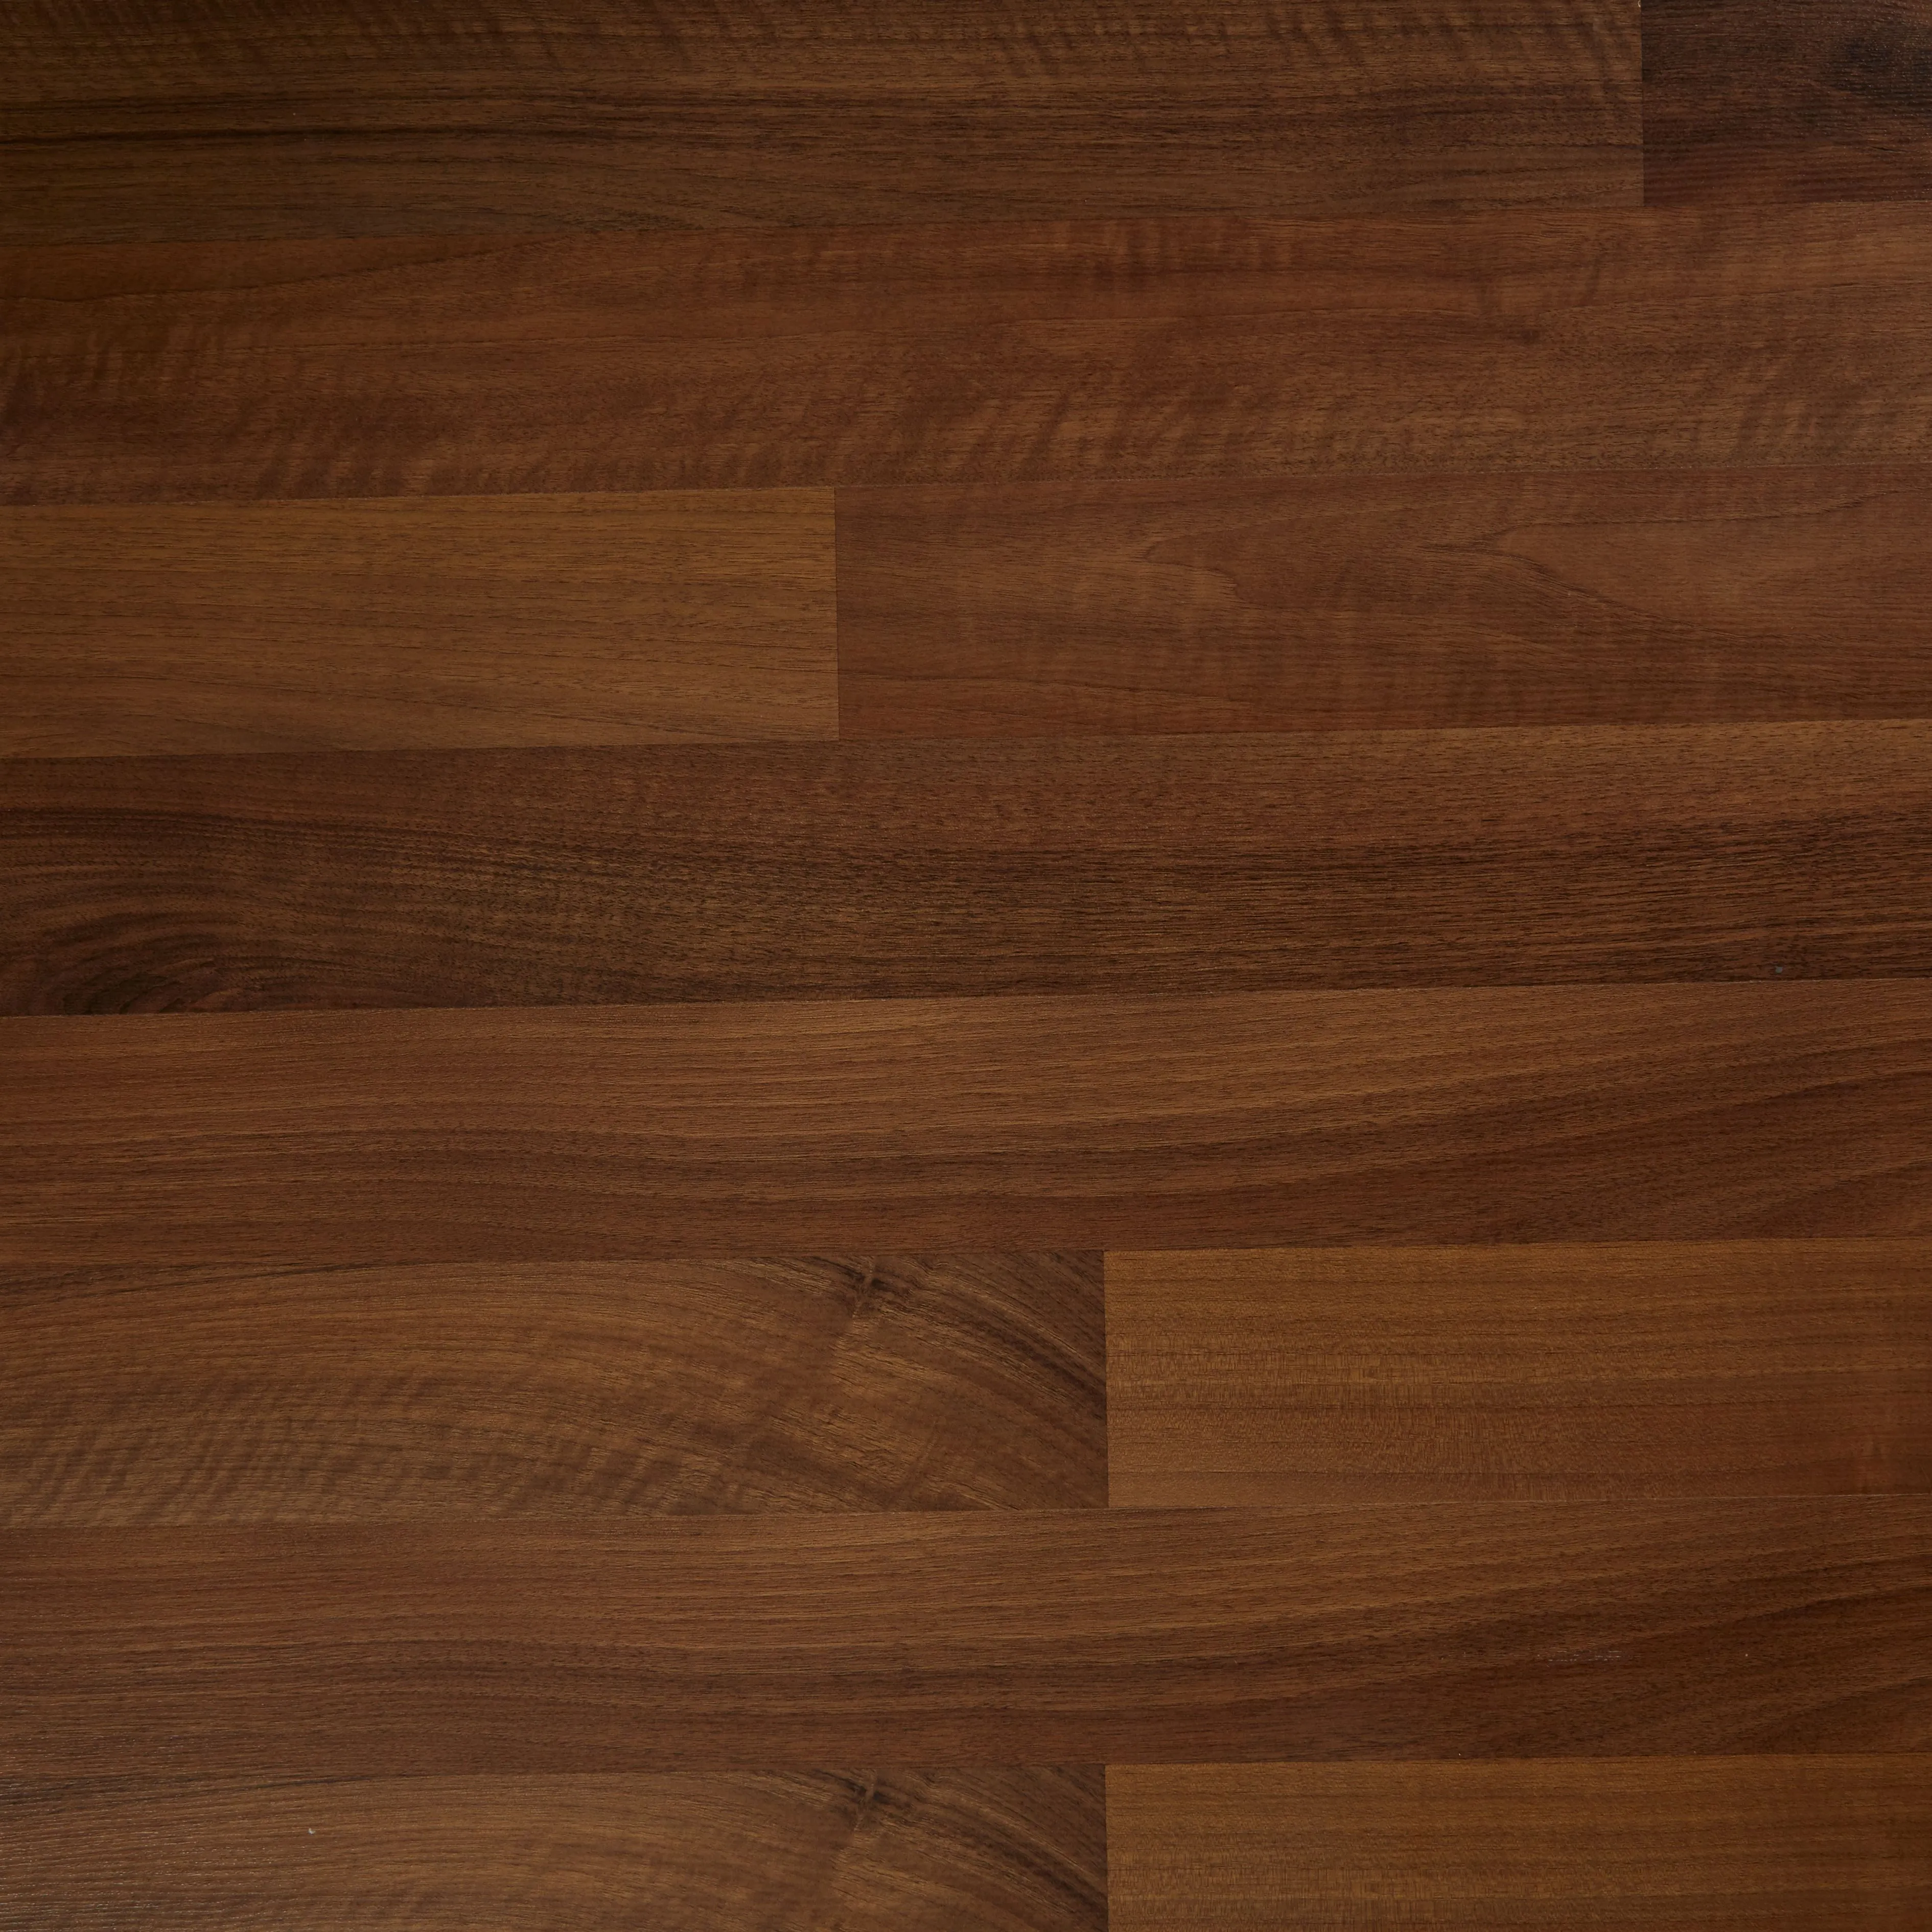 Geraldton Natural Gloss Walnut effect Laminate Flooring Sample